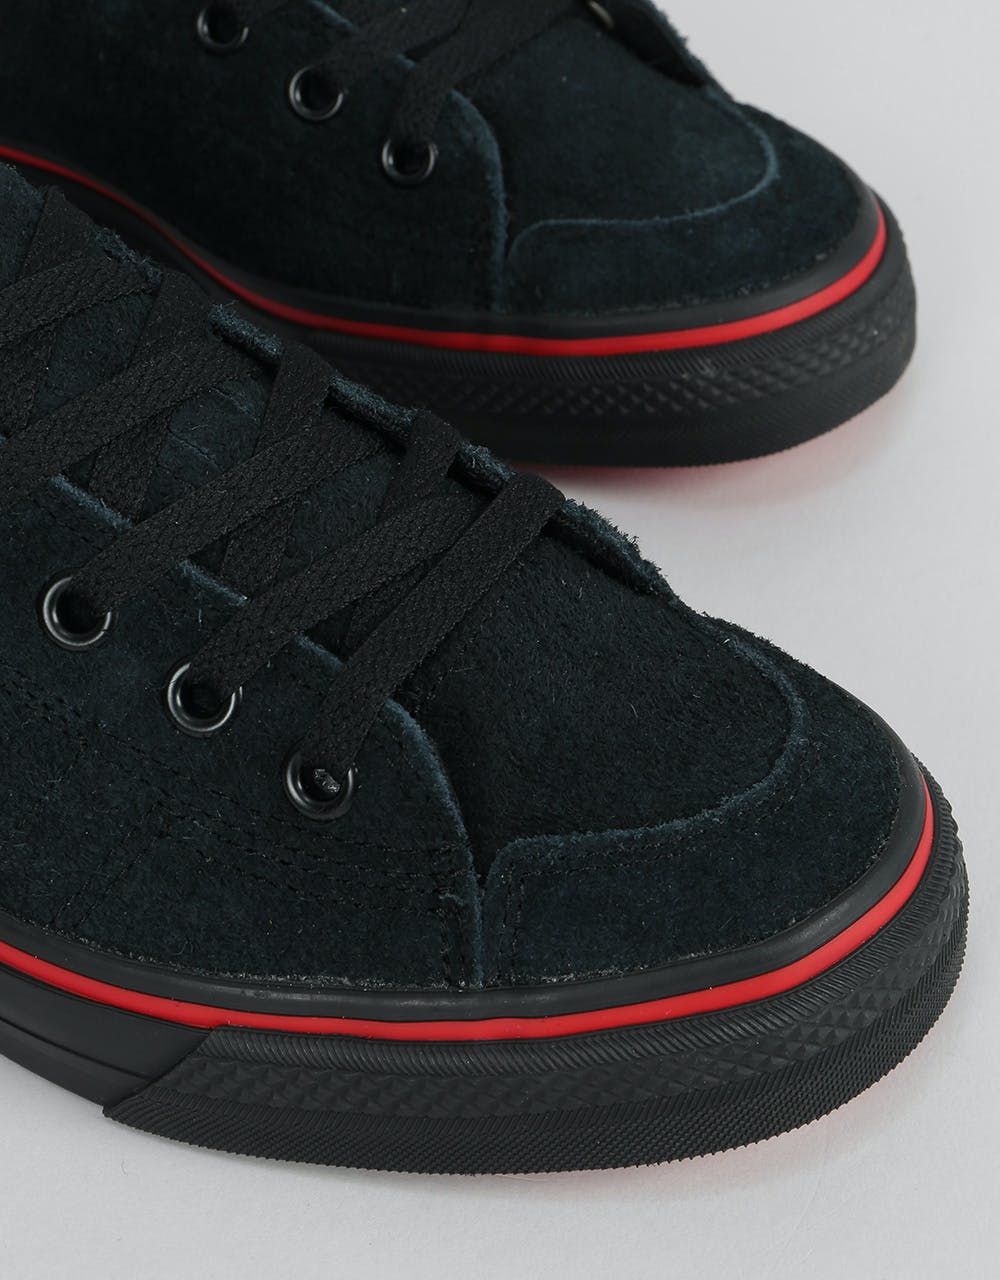 Adidas x Na-Kel Nizza RFS Skate Shoes - Black/Scarlet